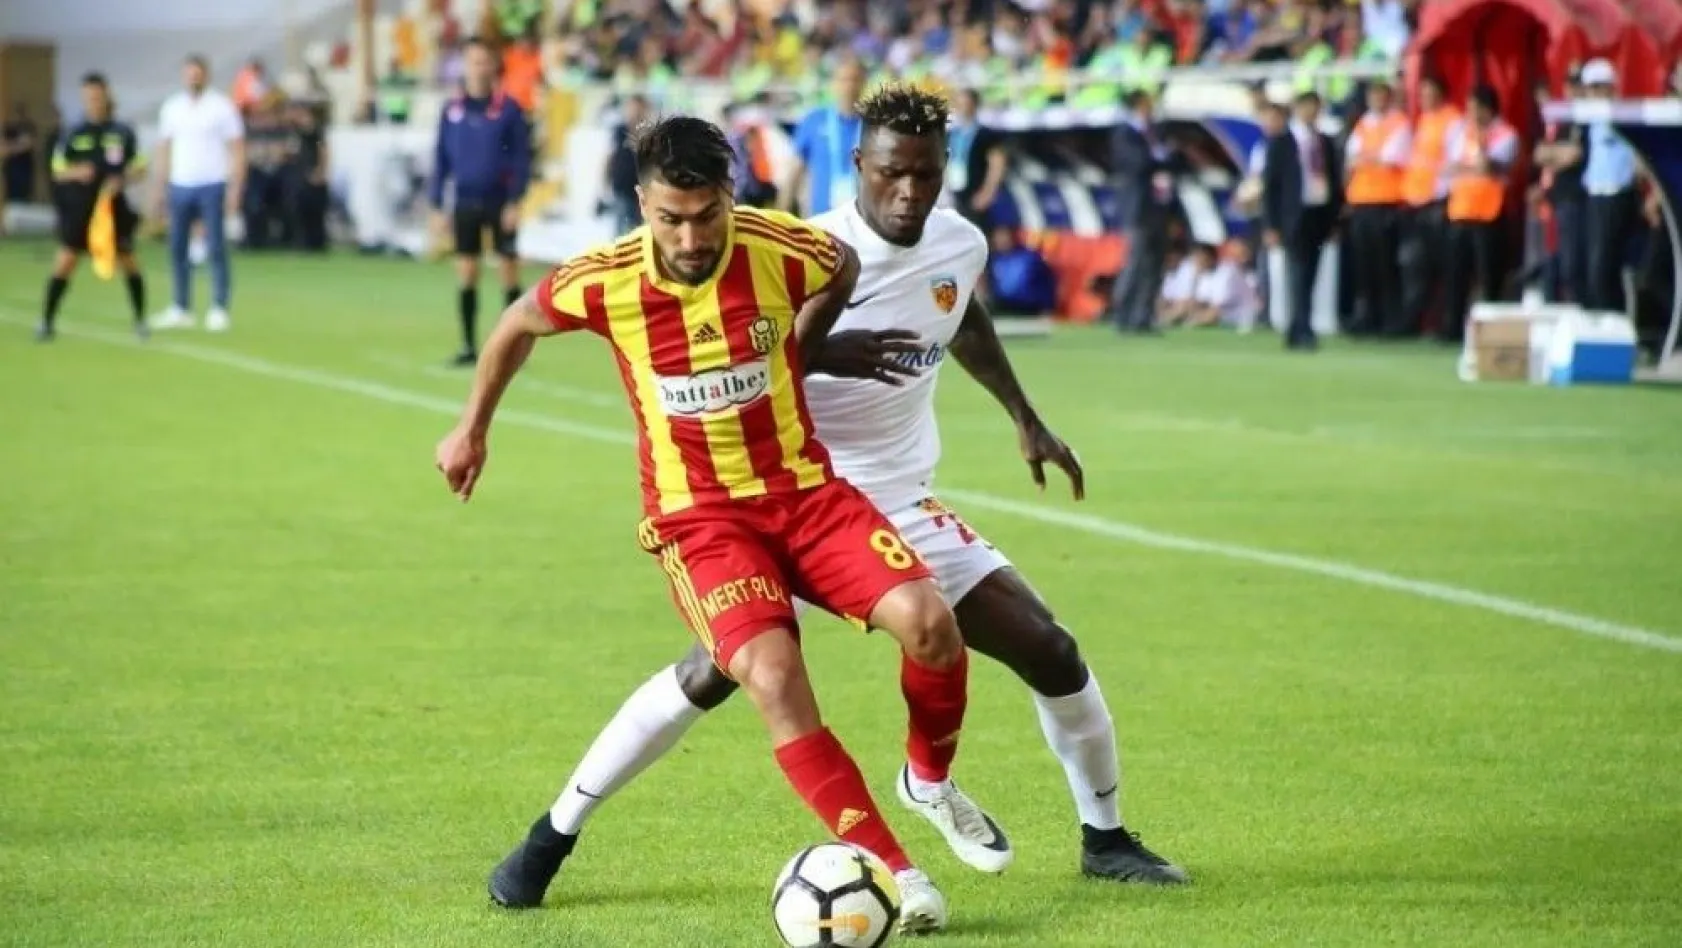 Spor Toto Süper Lig: E. Yeni Malatyaspor: 3 - Kayserispor: 2 (Maç sonucu)
